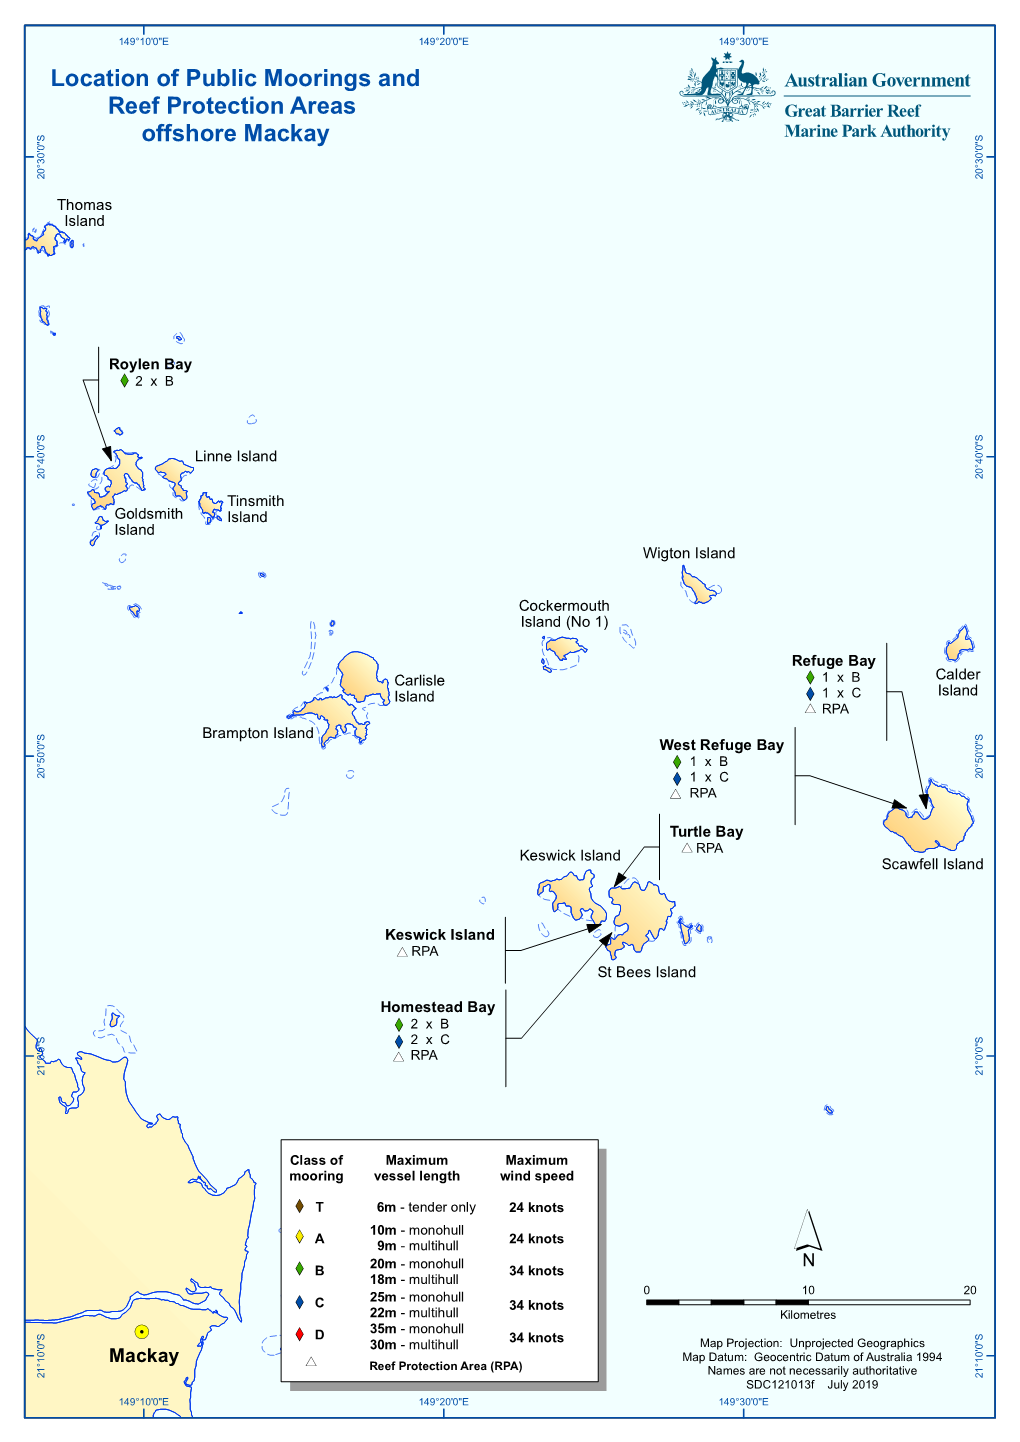 Offshore Mackay Public Moorings September 2019